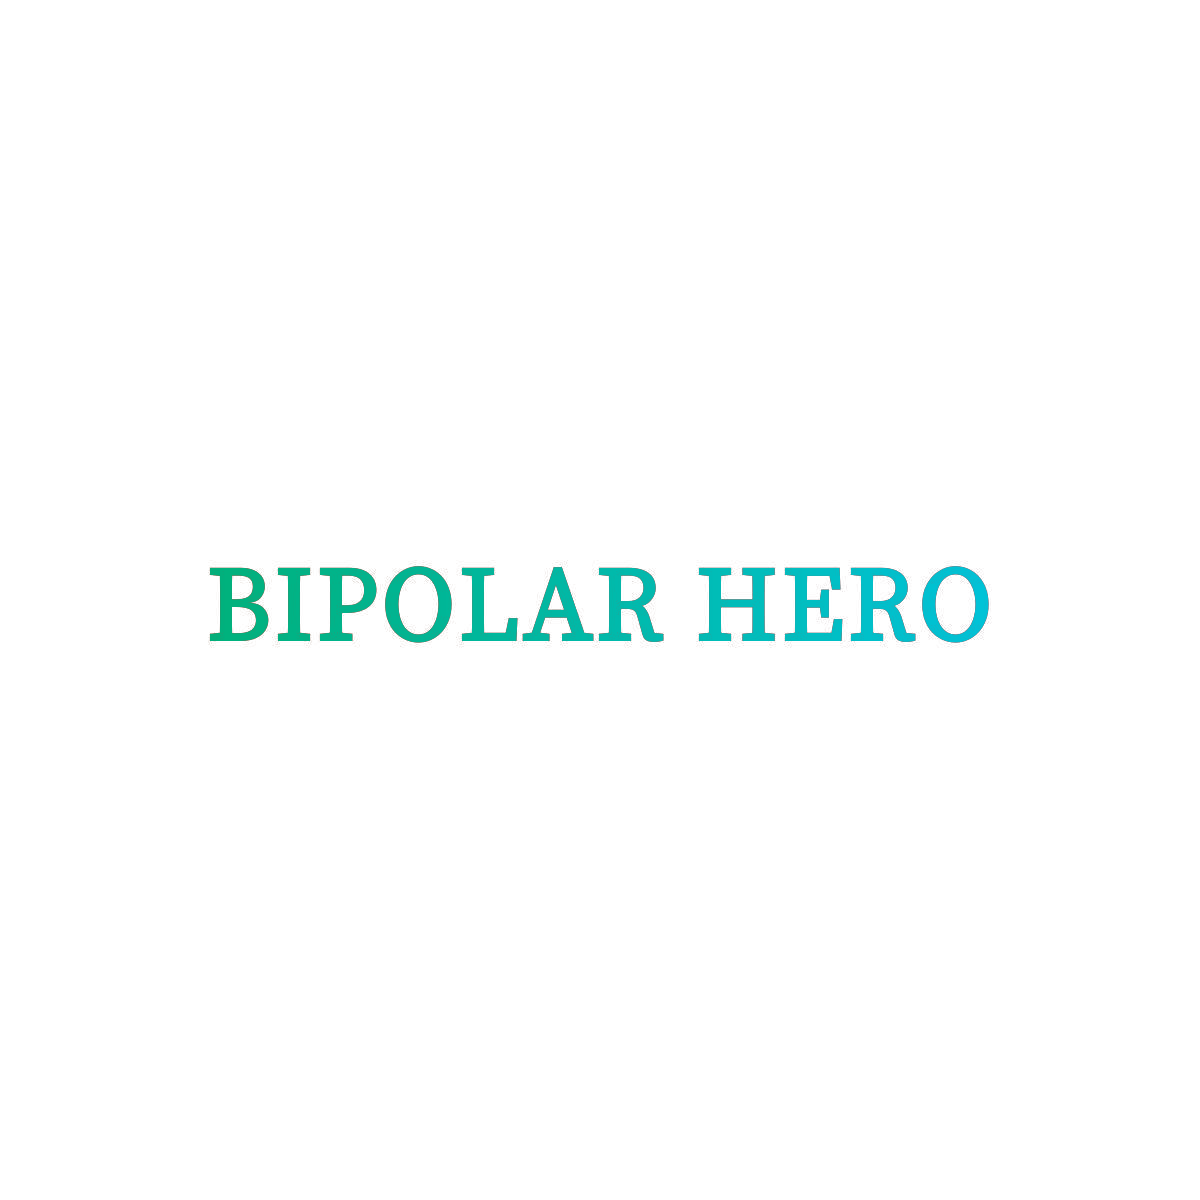 BIPOLAR HERO